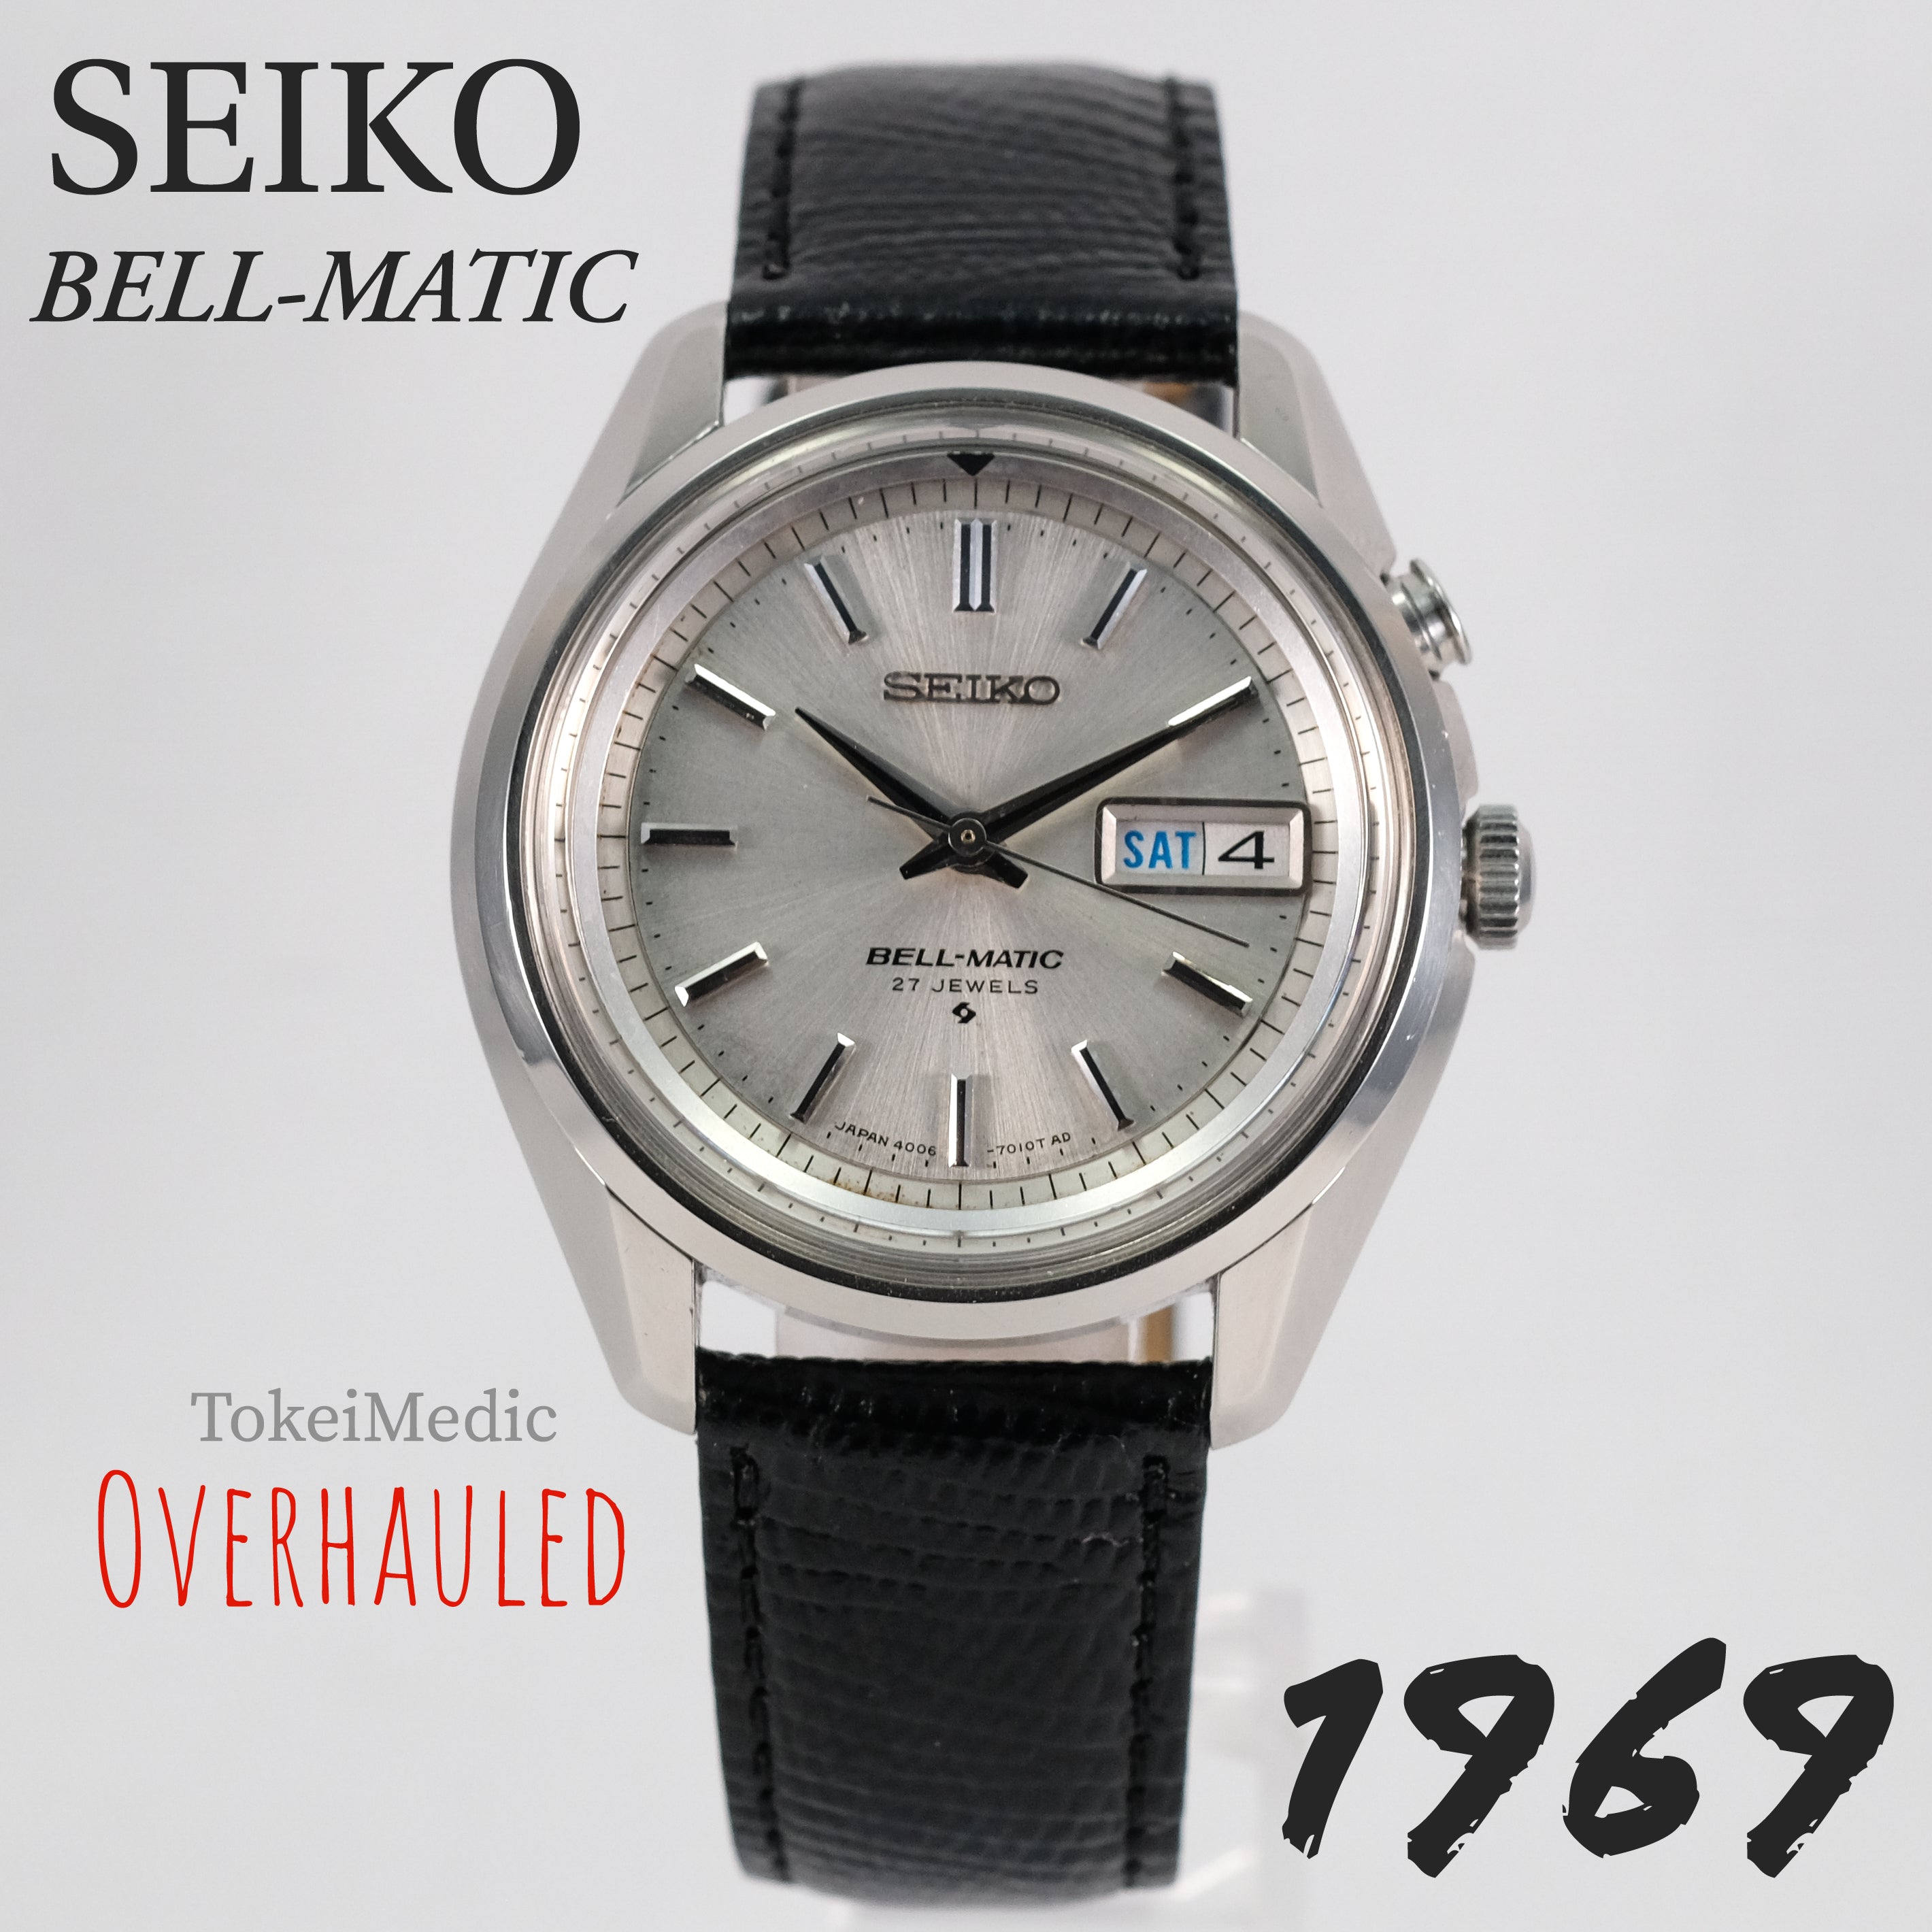 1969 Seiko JDM Bell-Matic 4006-7010